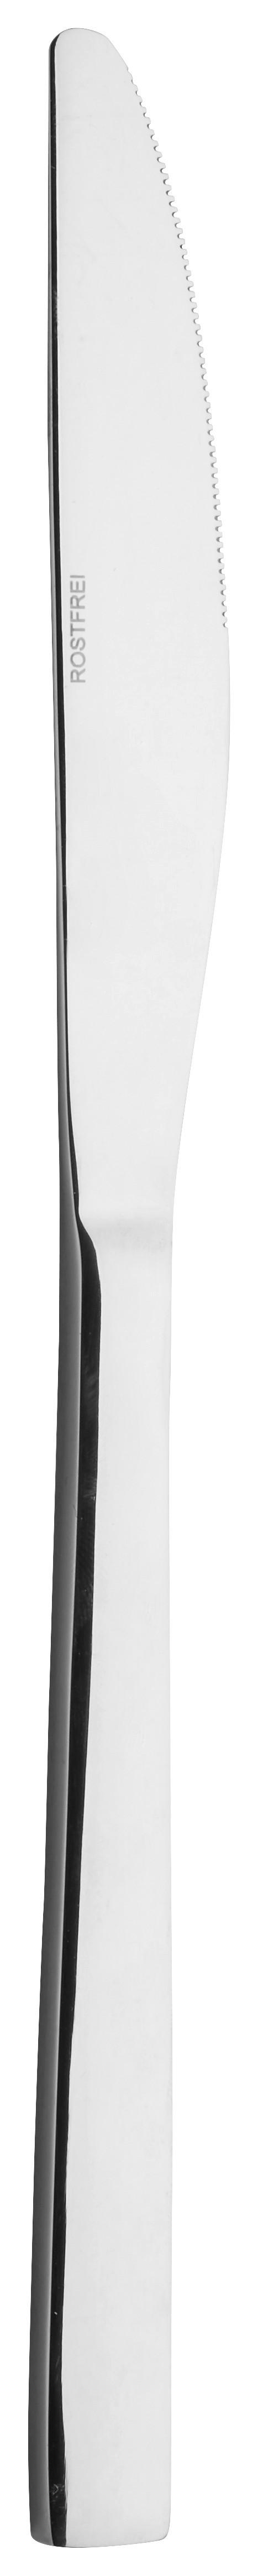 Messer Karo aus Edelstahl - Edelstahlfarben, Metall (22,8cm) - Modern Living